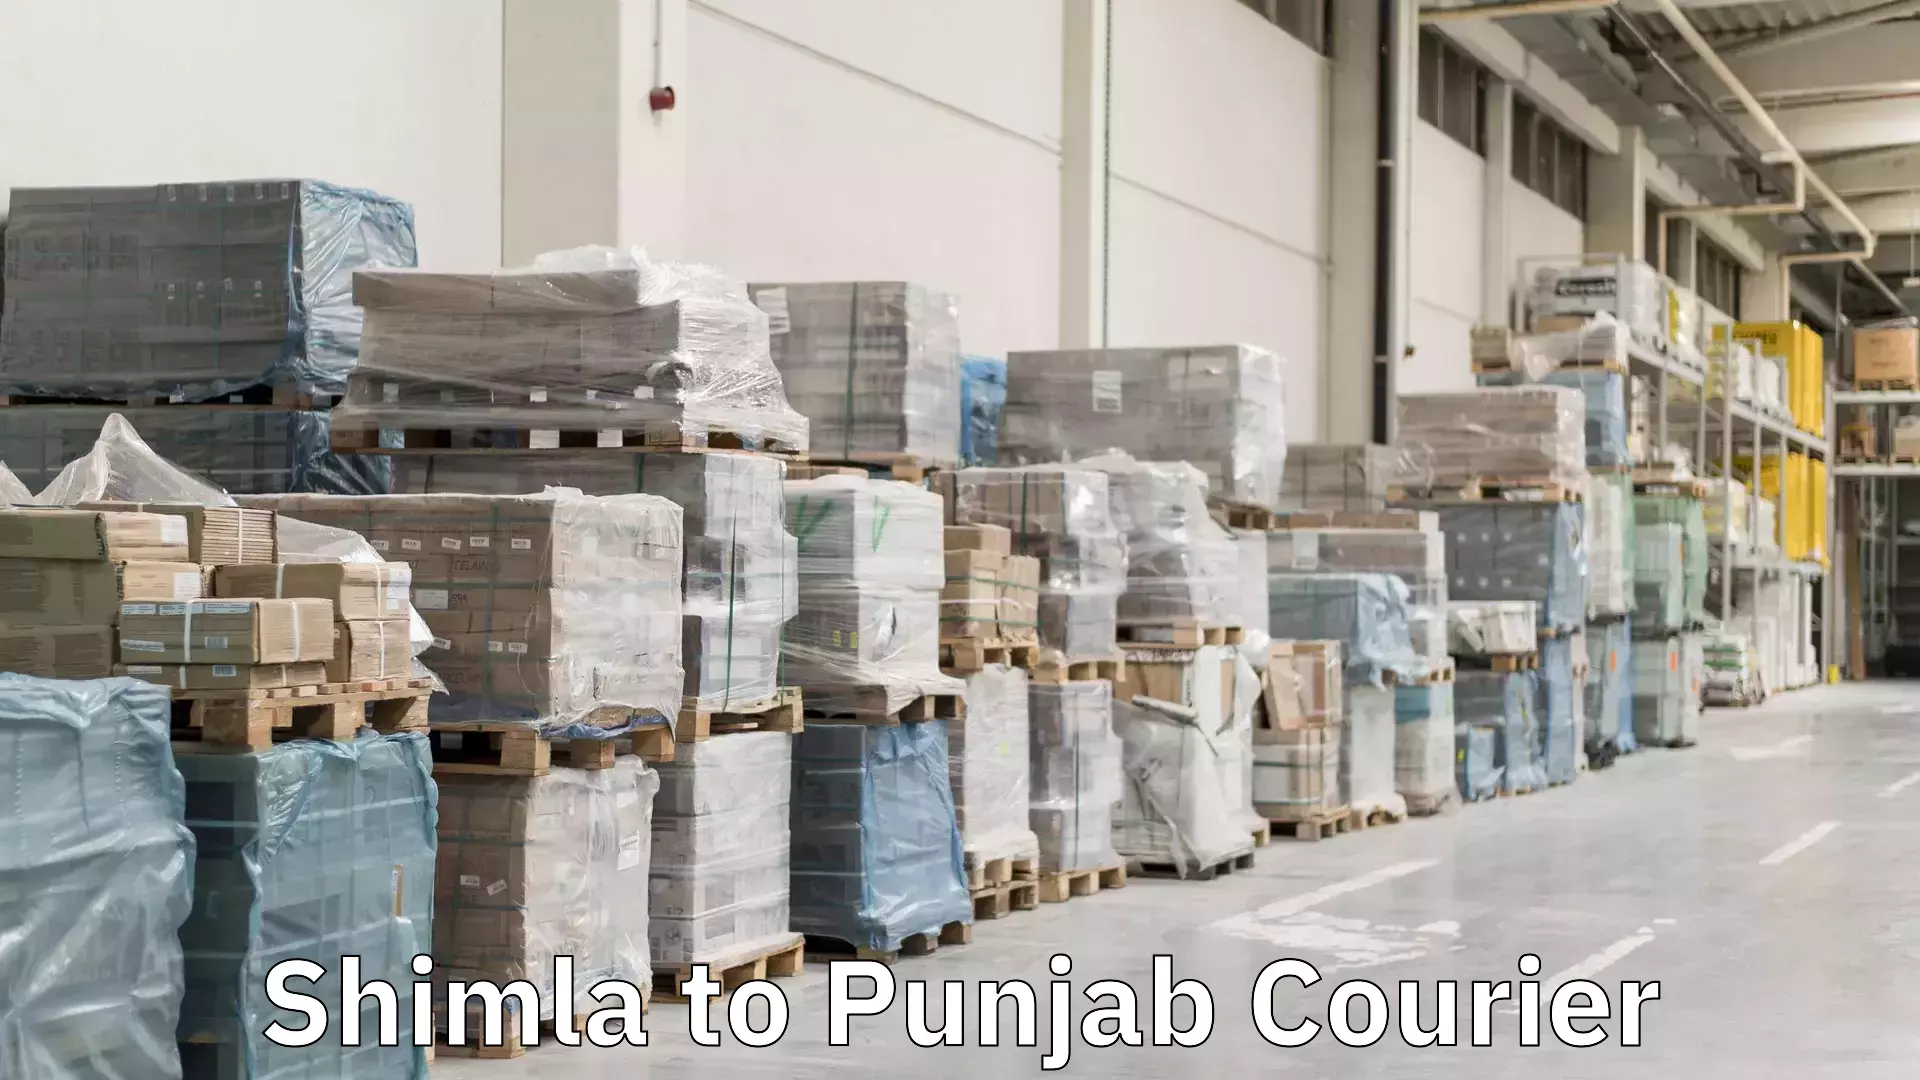 Fast delivery service Shimla to Punjab